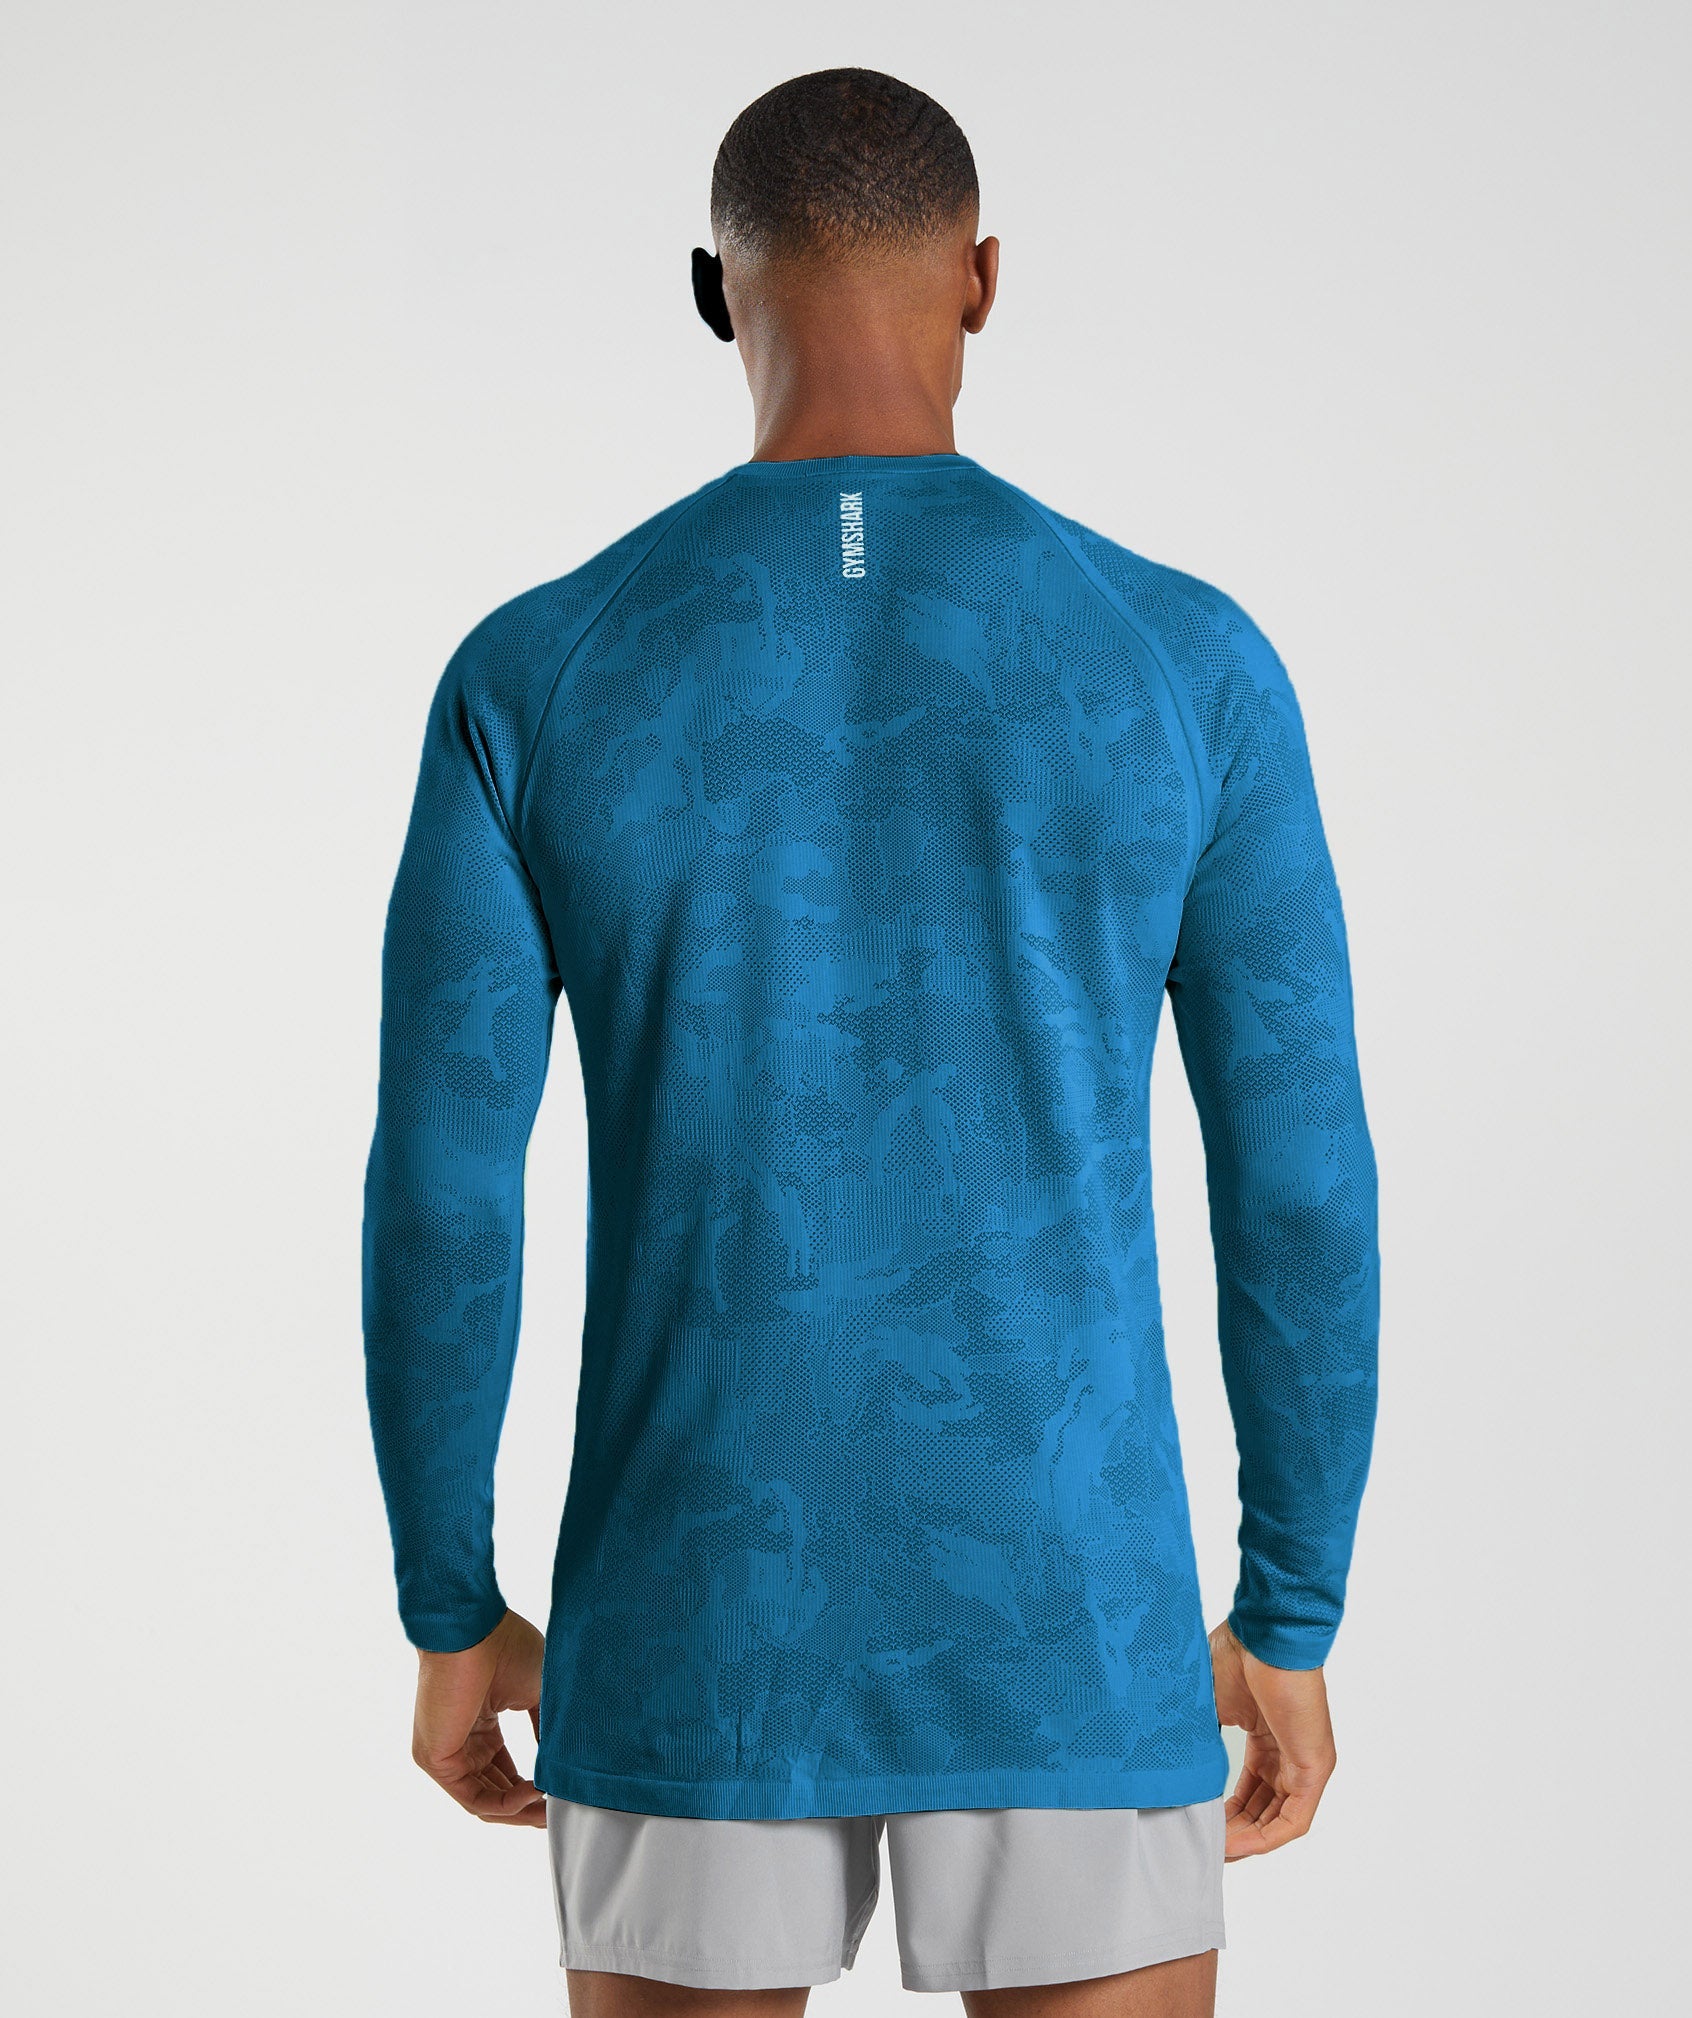 Geo Seamless Long Sleeve T-Shirt in Atlantic Blue/Shark Blue